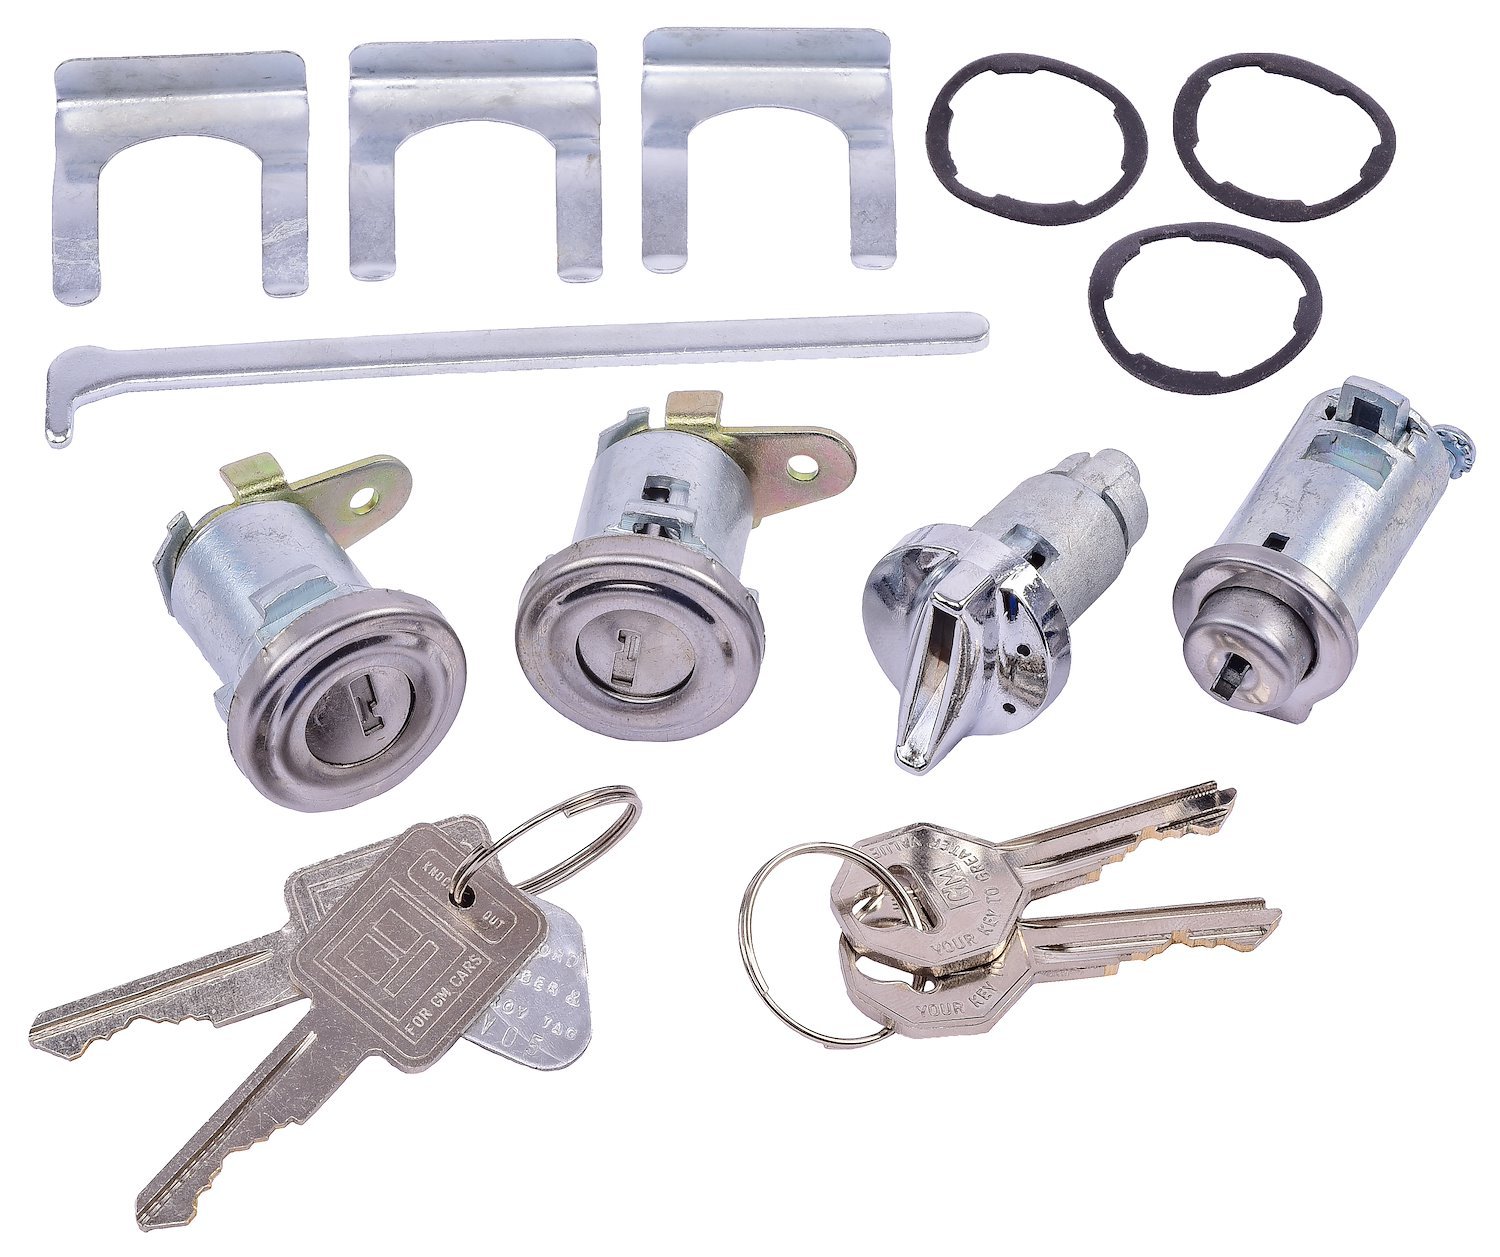 Ignition, Door & Glovebox Lock Set Fits Select 1956 Chevrolet Wagon Models [Original Octagon Keys]